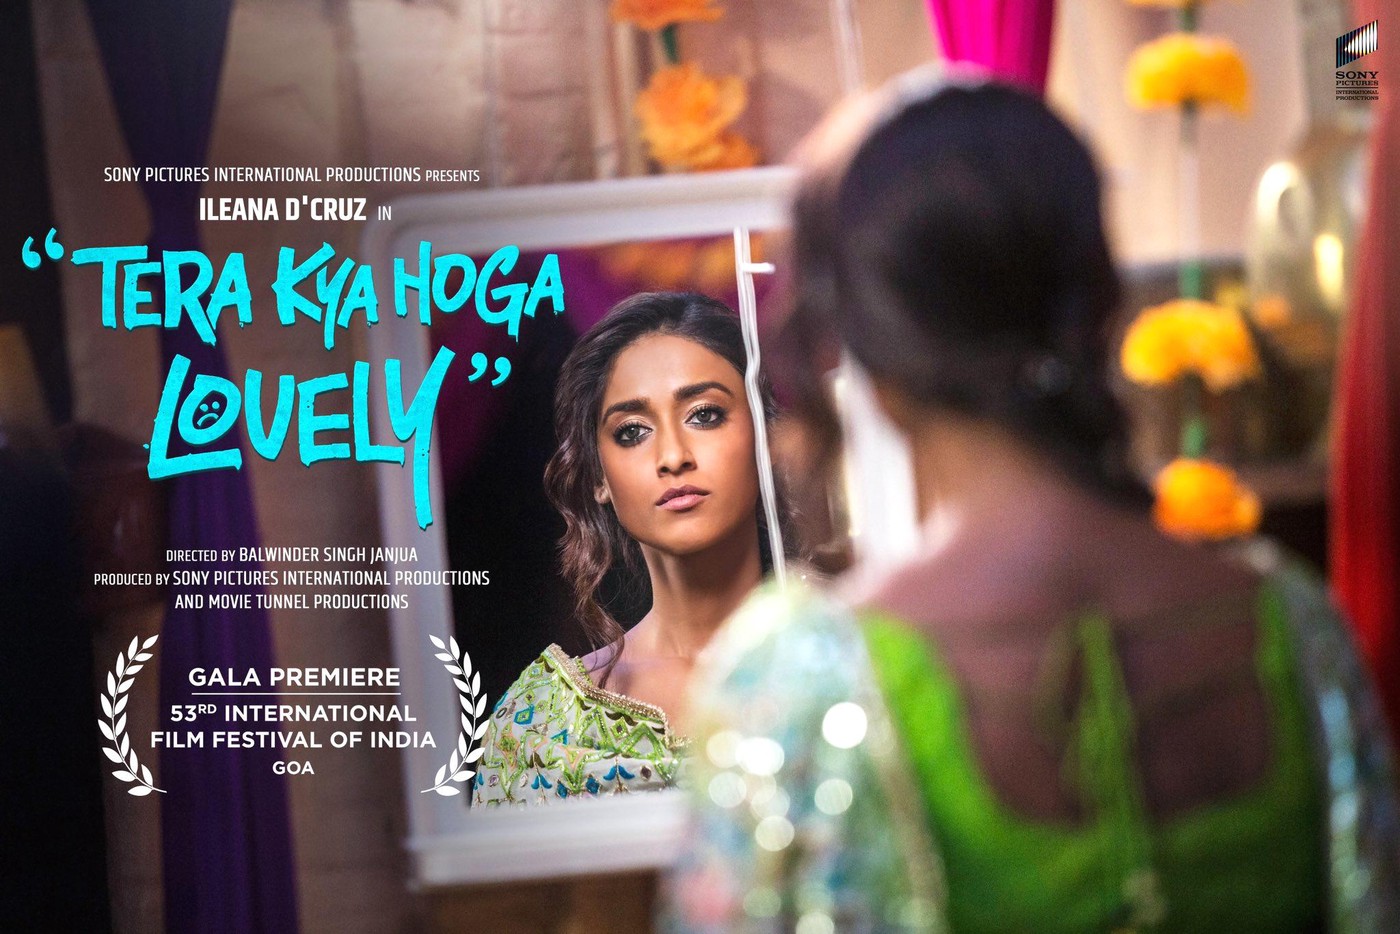 Binge Reviews: Tera Kya Hoga Lovely